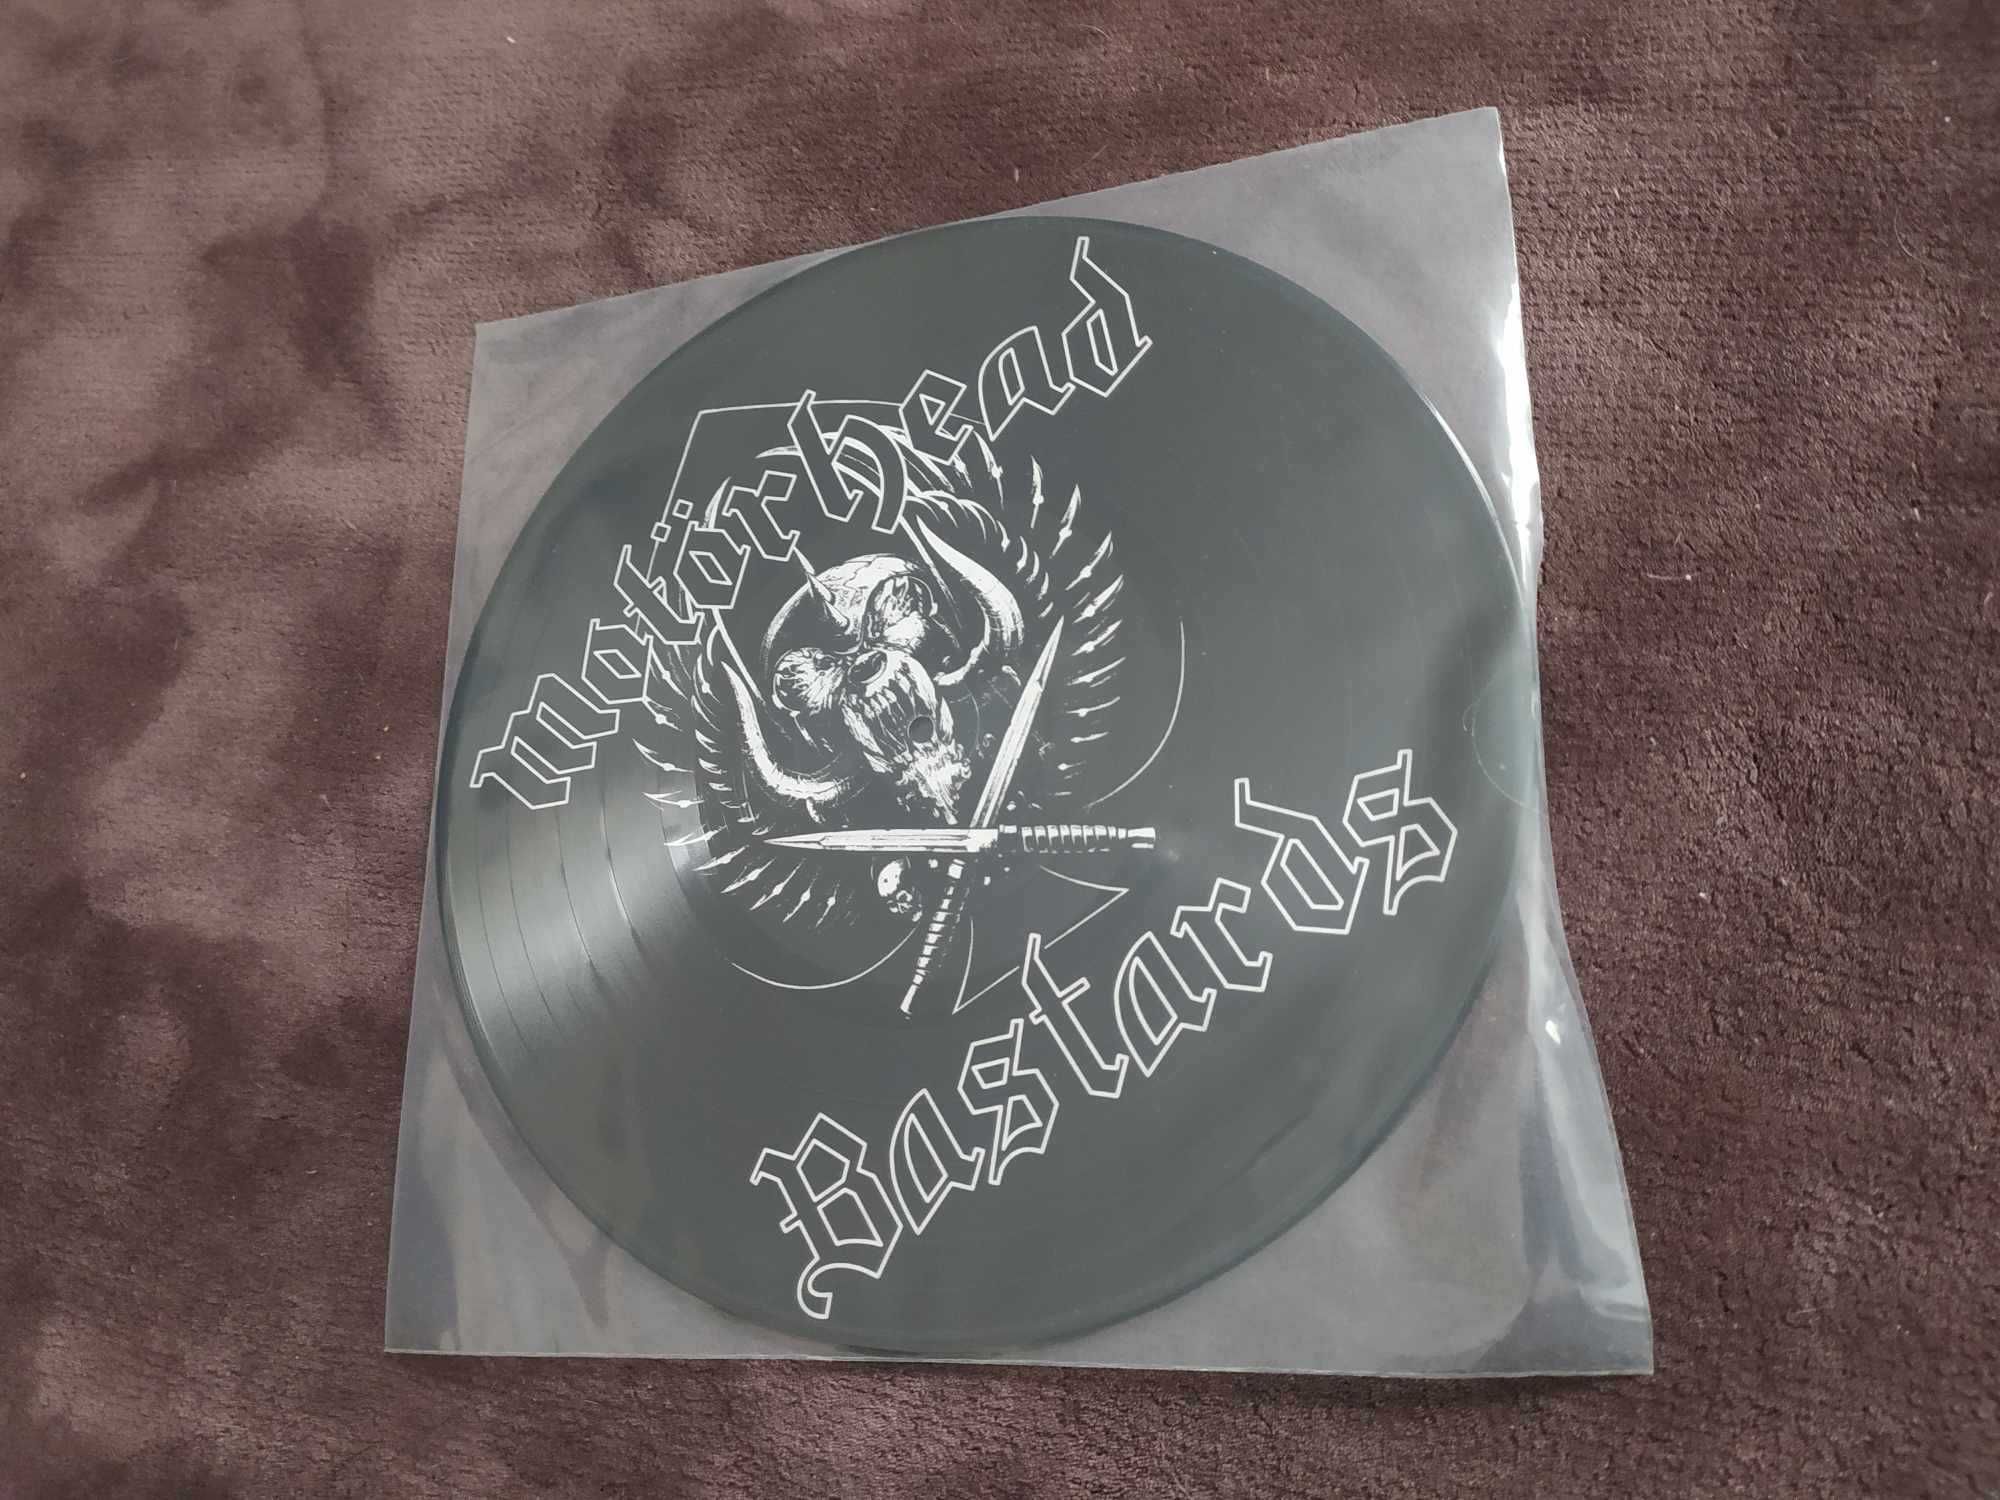 Motorhead - "Bastards" Lp Picture Disc, nowy, folia